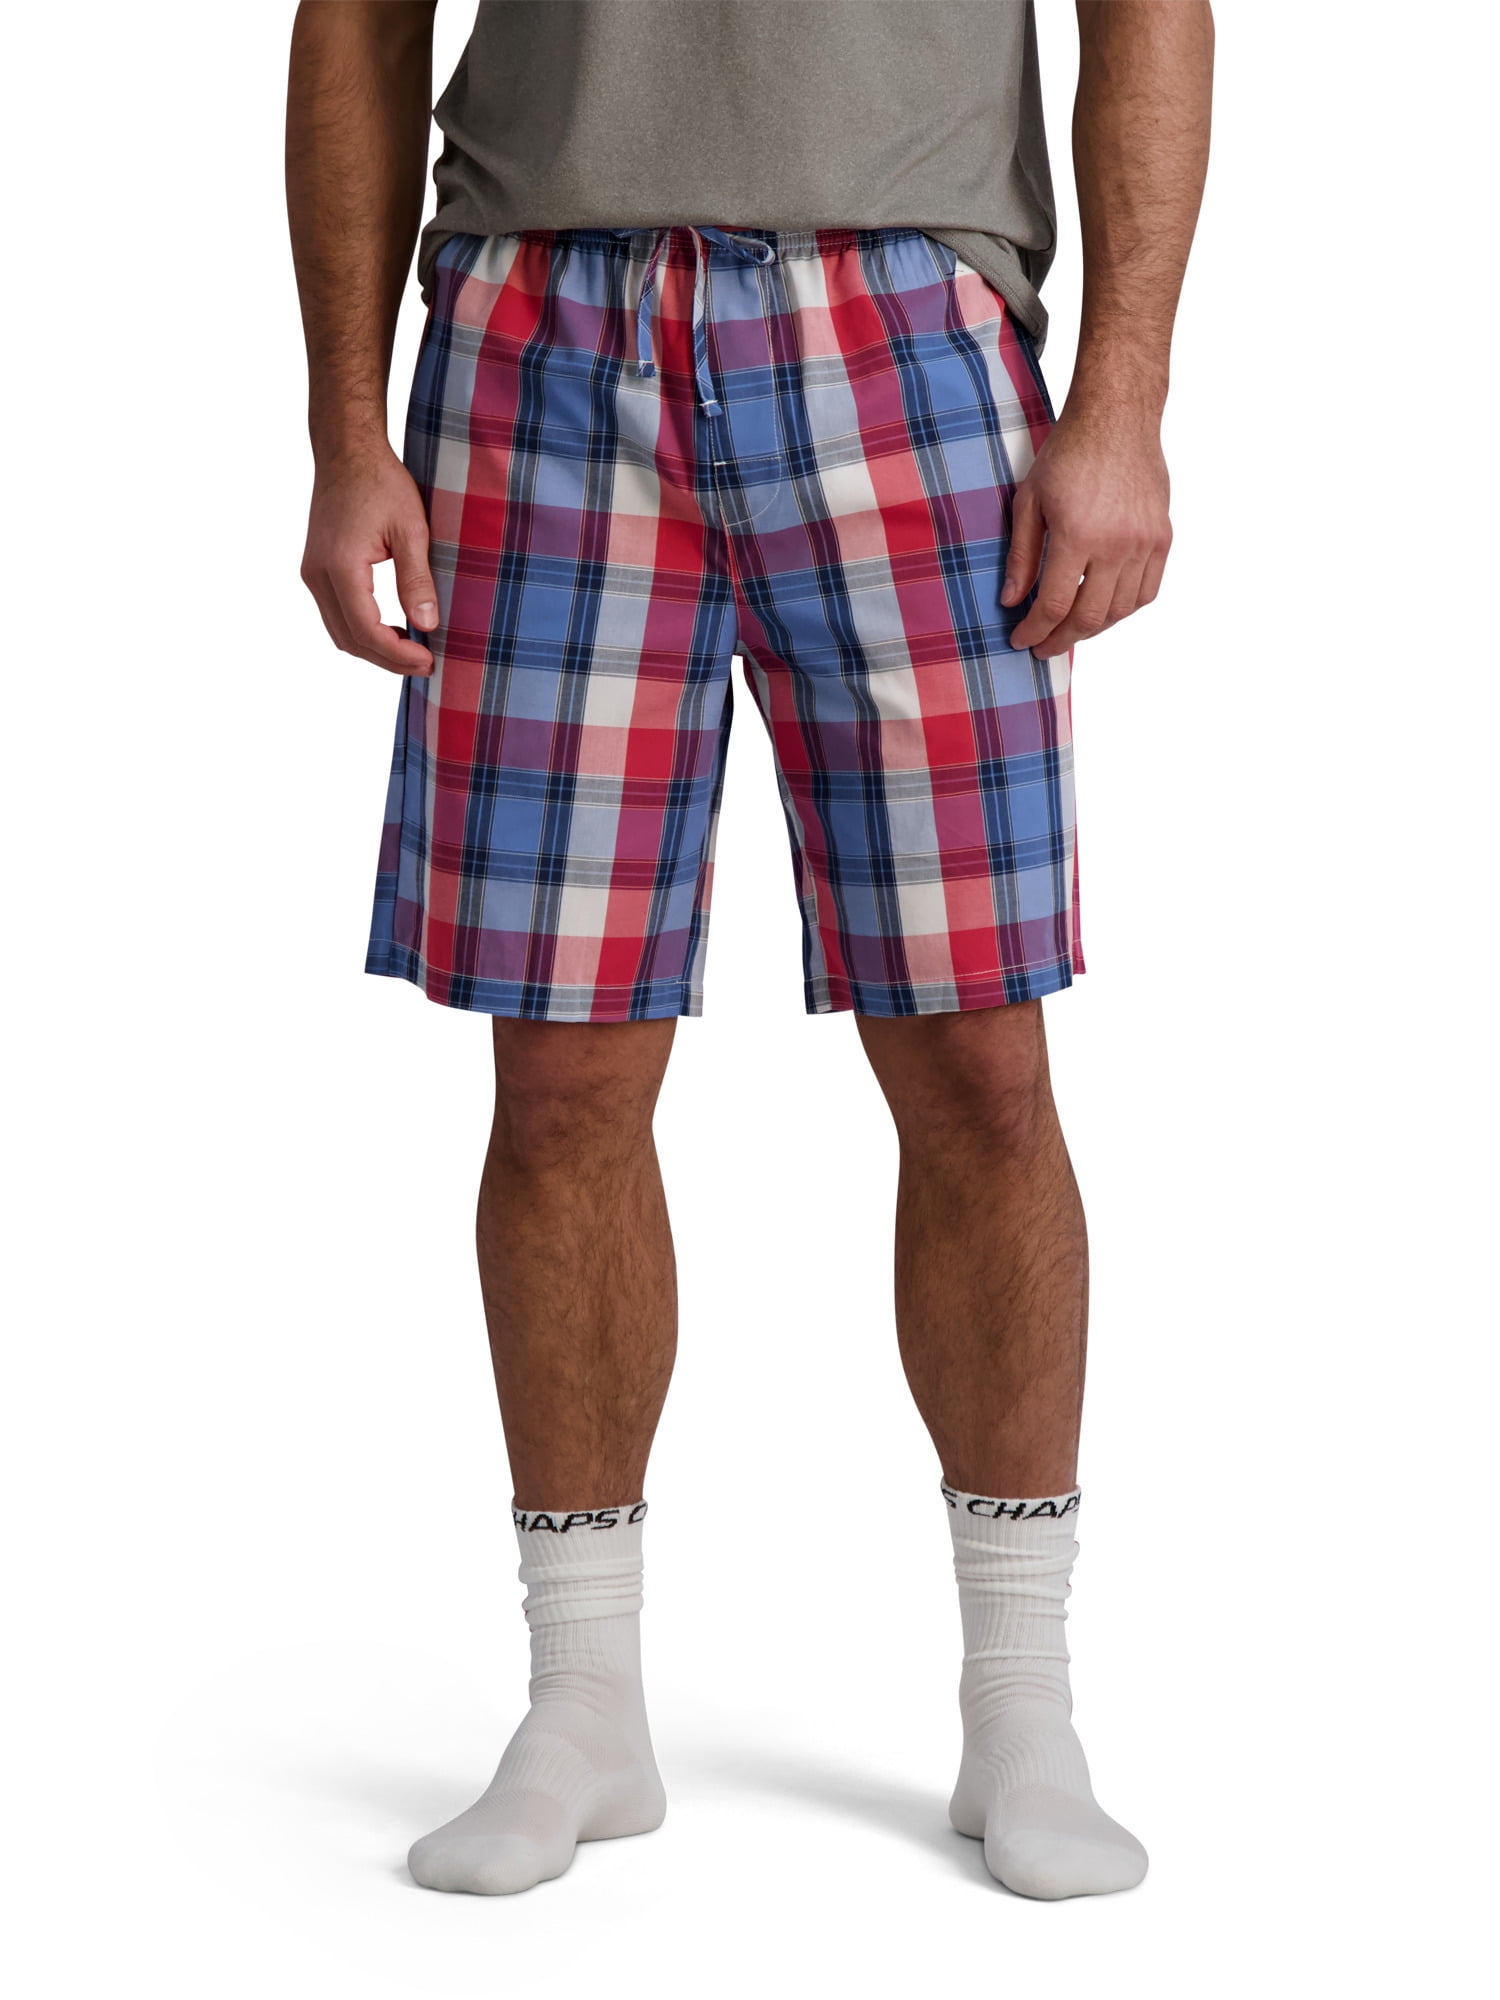 Chaps Men's Classic Poplin Sleep Shorts w/ Pockets (S-XL, Various) $6.68 + Free S&H w/ Walmart+ or $35+